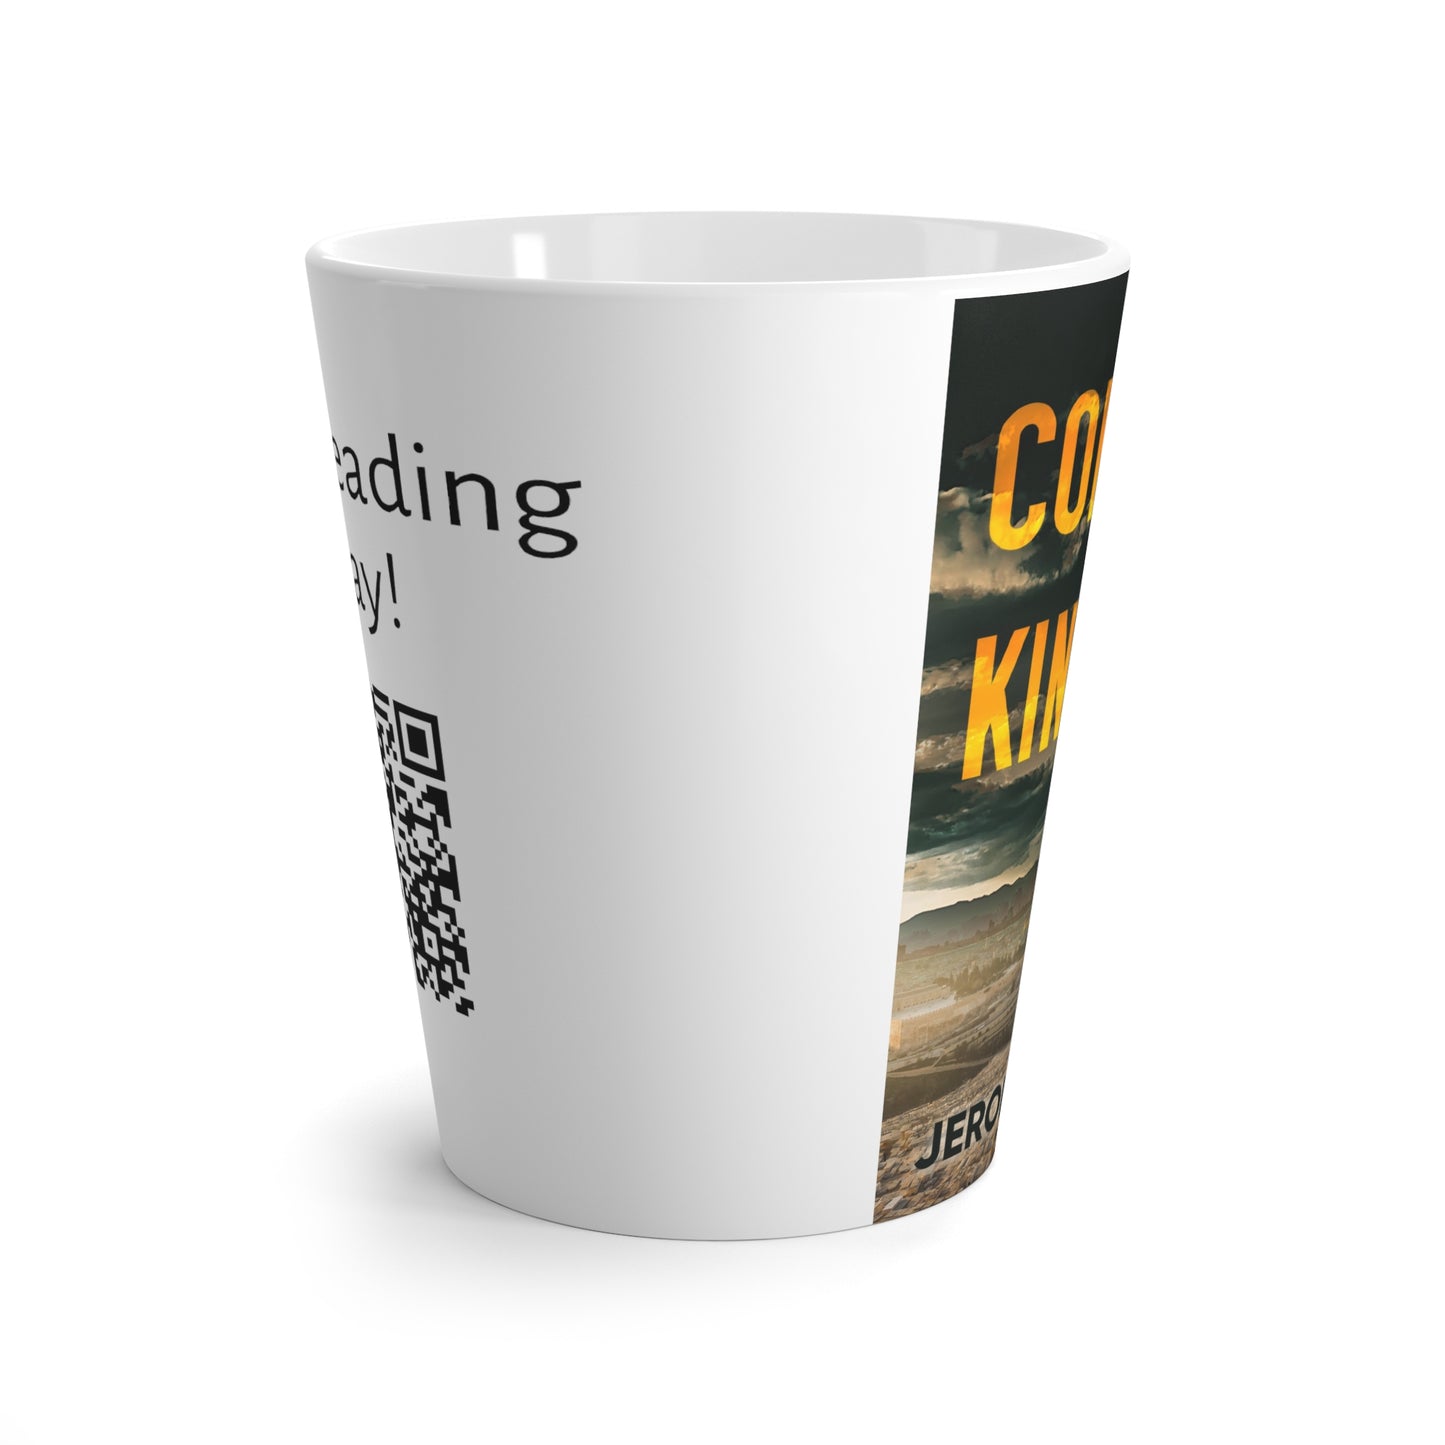 Convene The Kingdom - Latte Mug